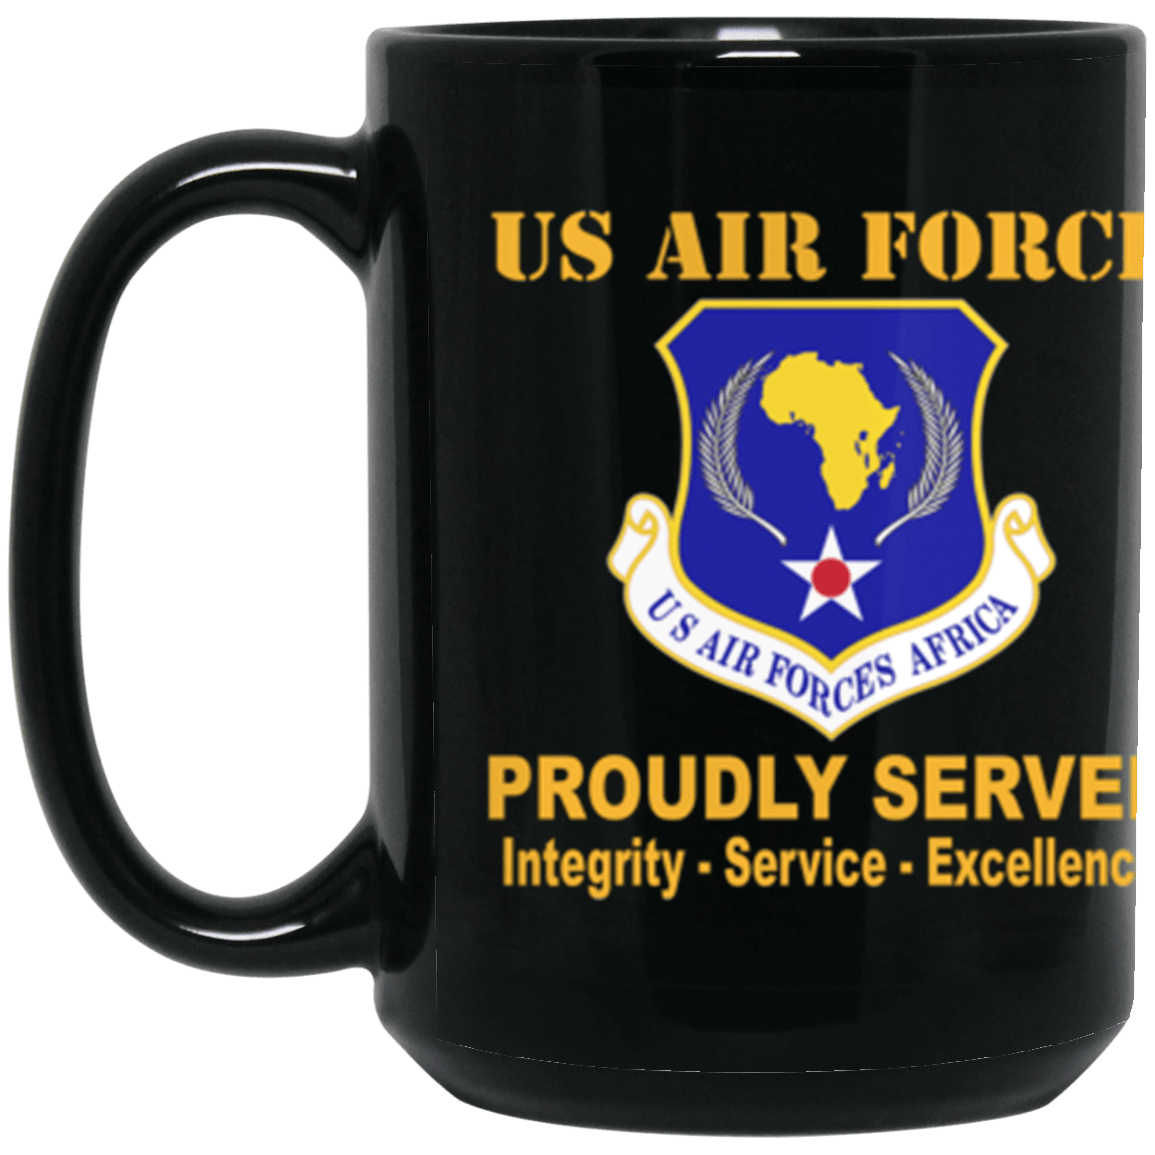 US Air Force Air Force Intelligence Command Proudly Served Core Values 15 oz. Black Mug-Mug-USAF-Veterans Nation